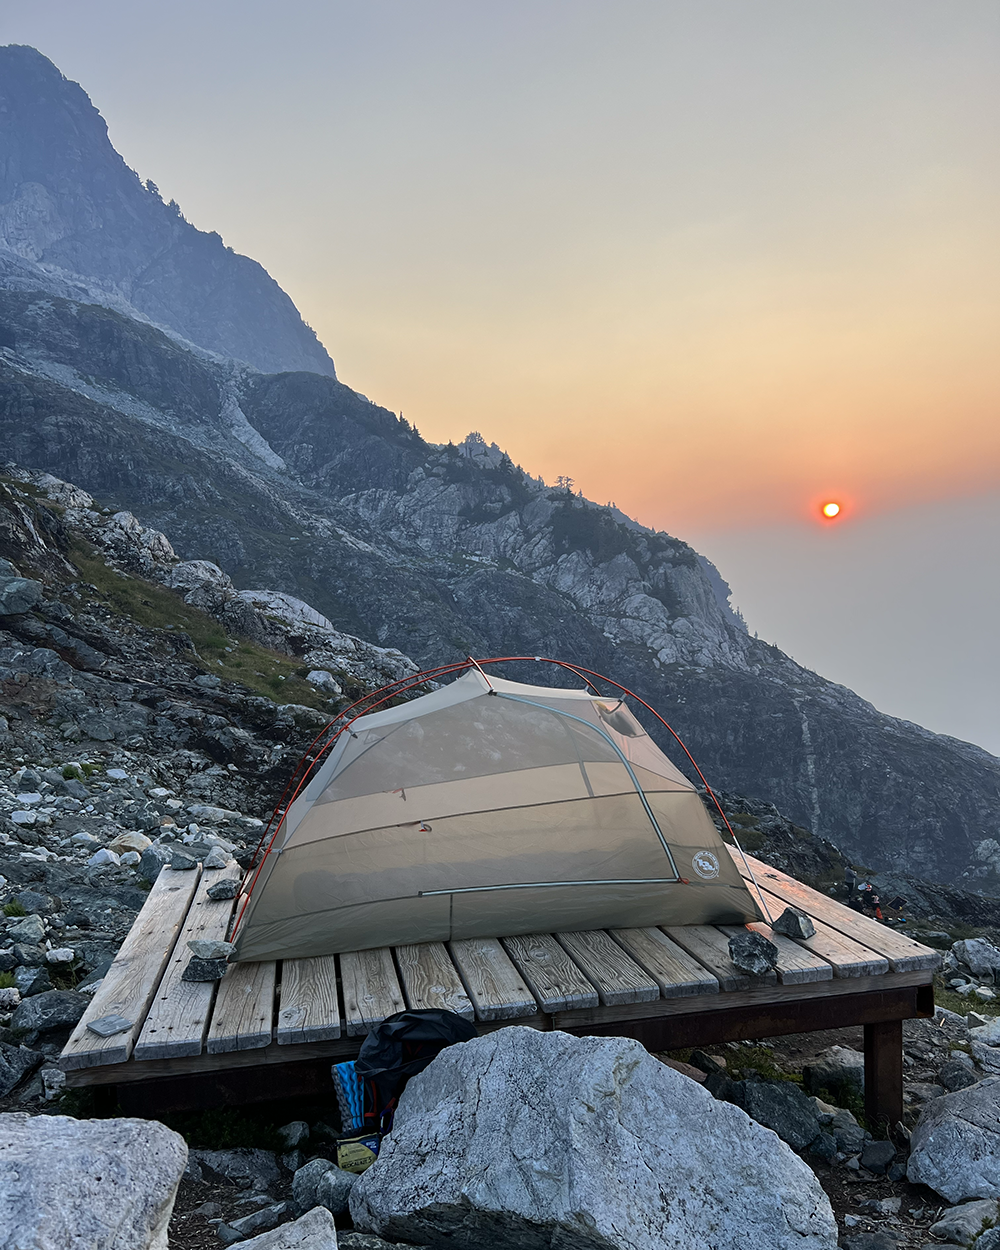  My tent on Panorama Ridge with a smoky sunset.  